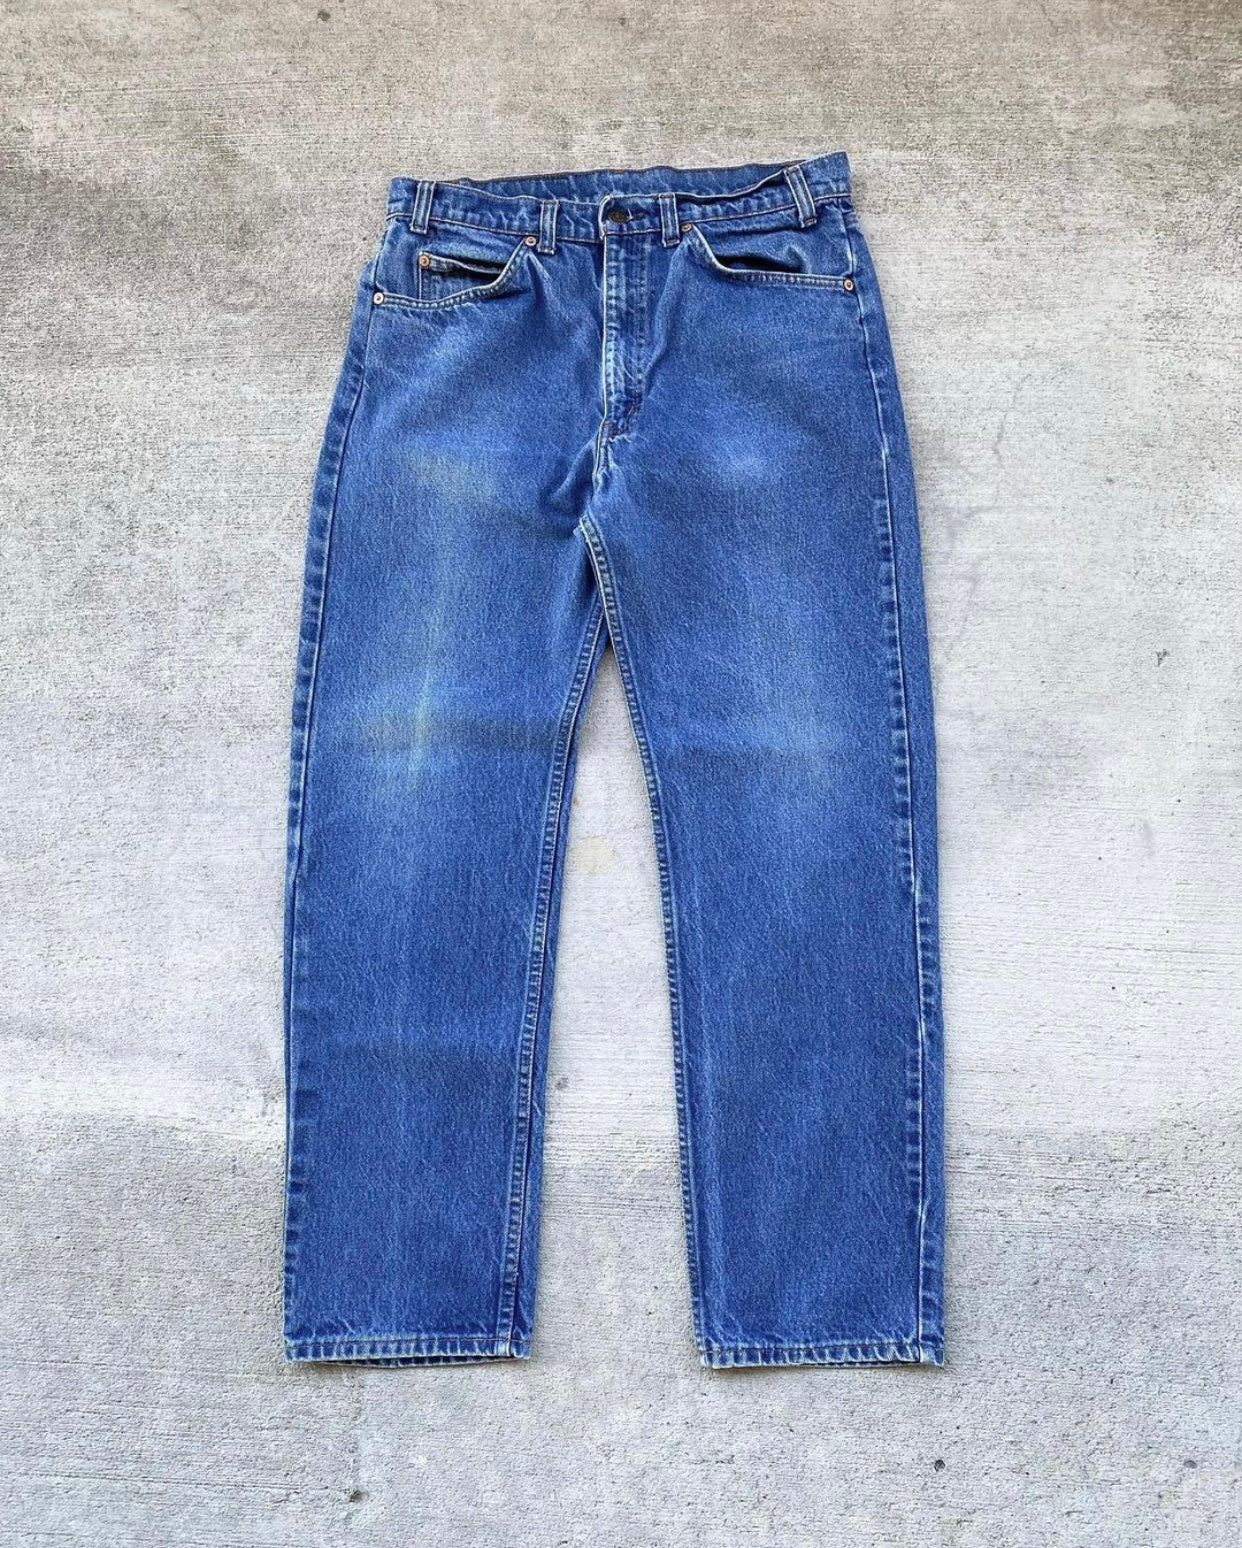 1980s Levi's Orange Tab 505 Jeans - Size 32 x 30